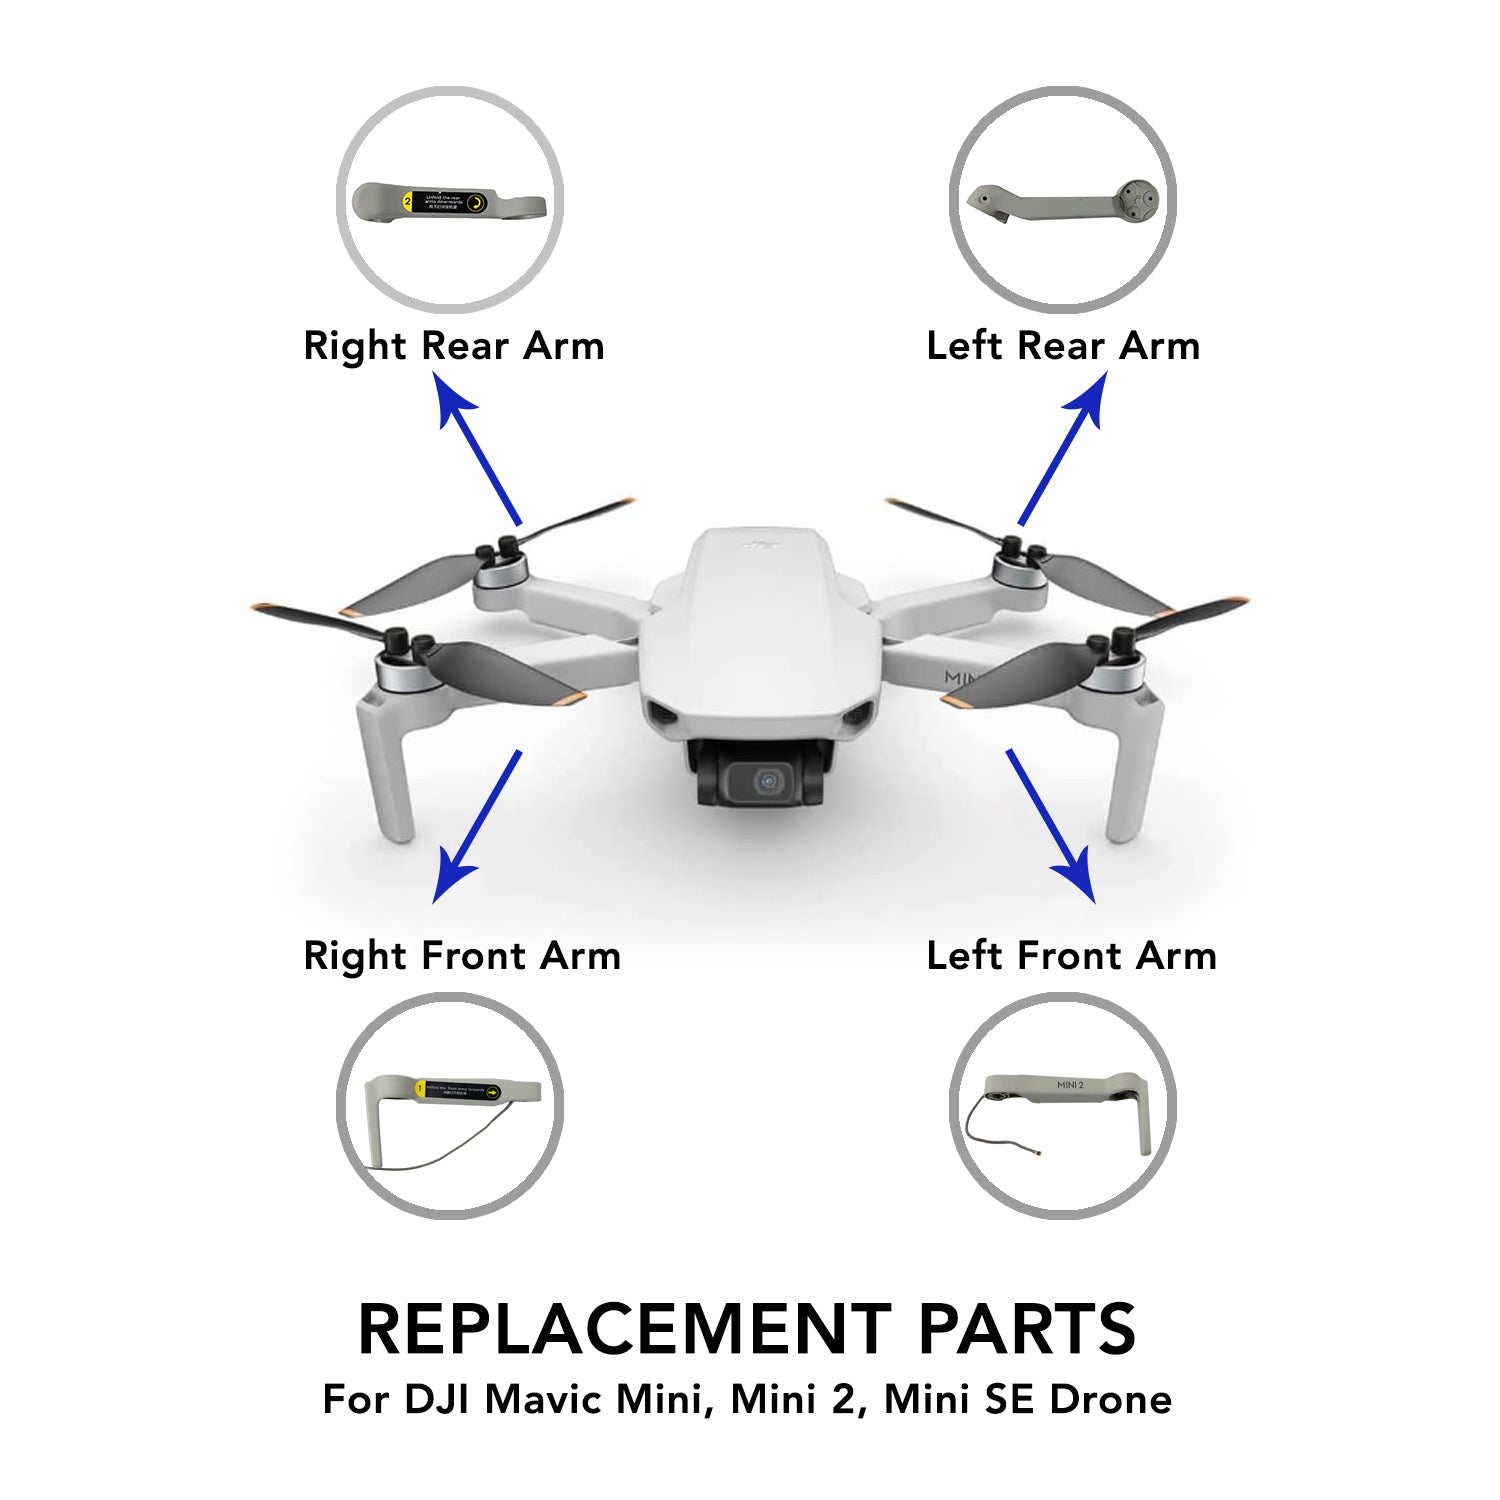 Replacement Parts for DJI Mavic Mini, Mini 2, Mini SE Drone